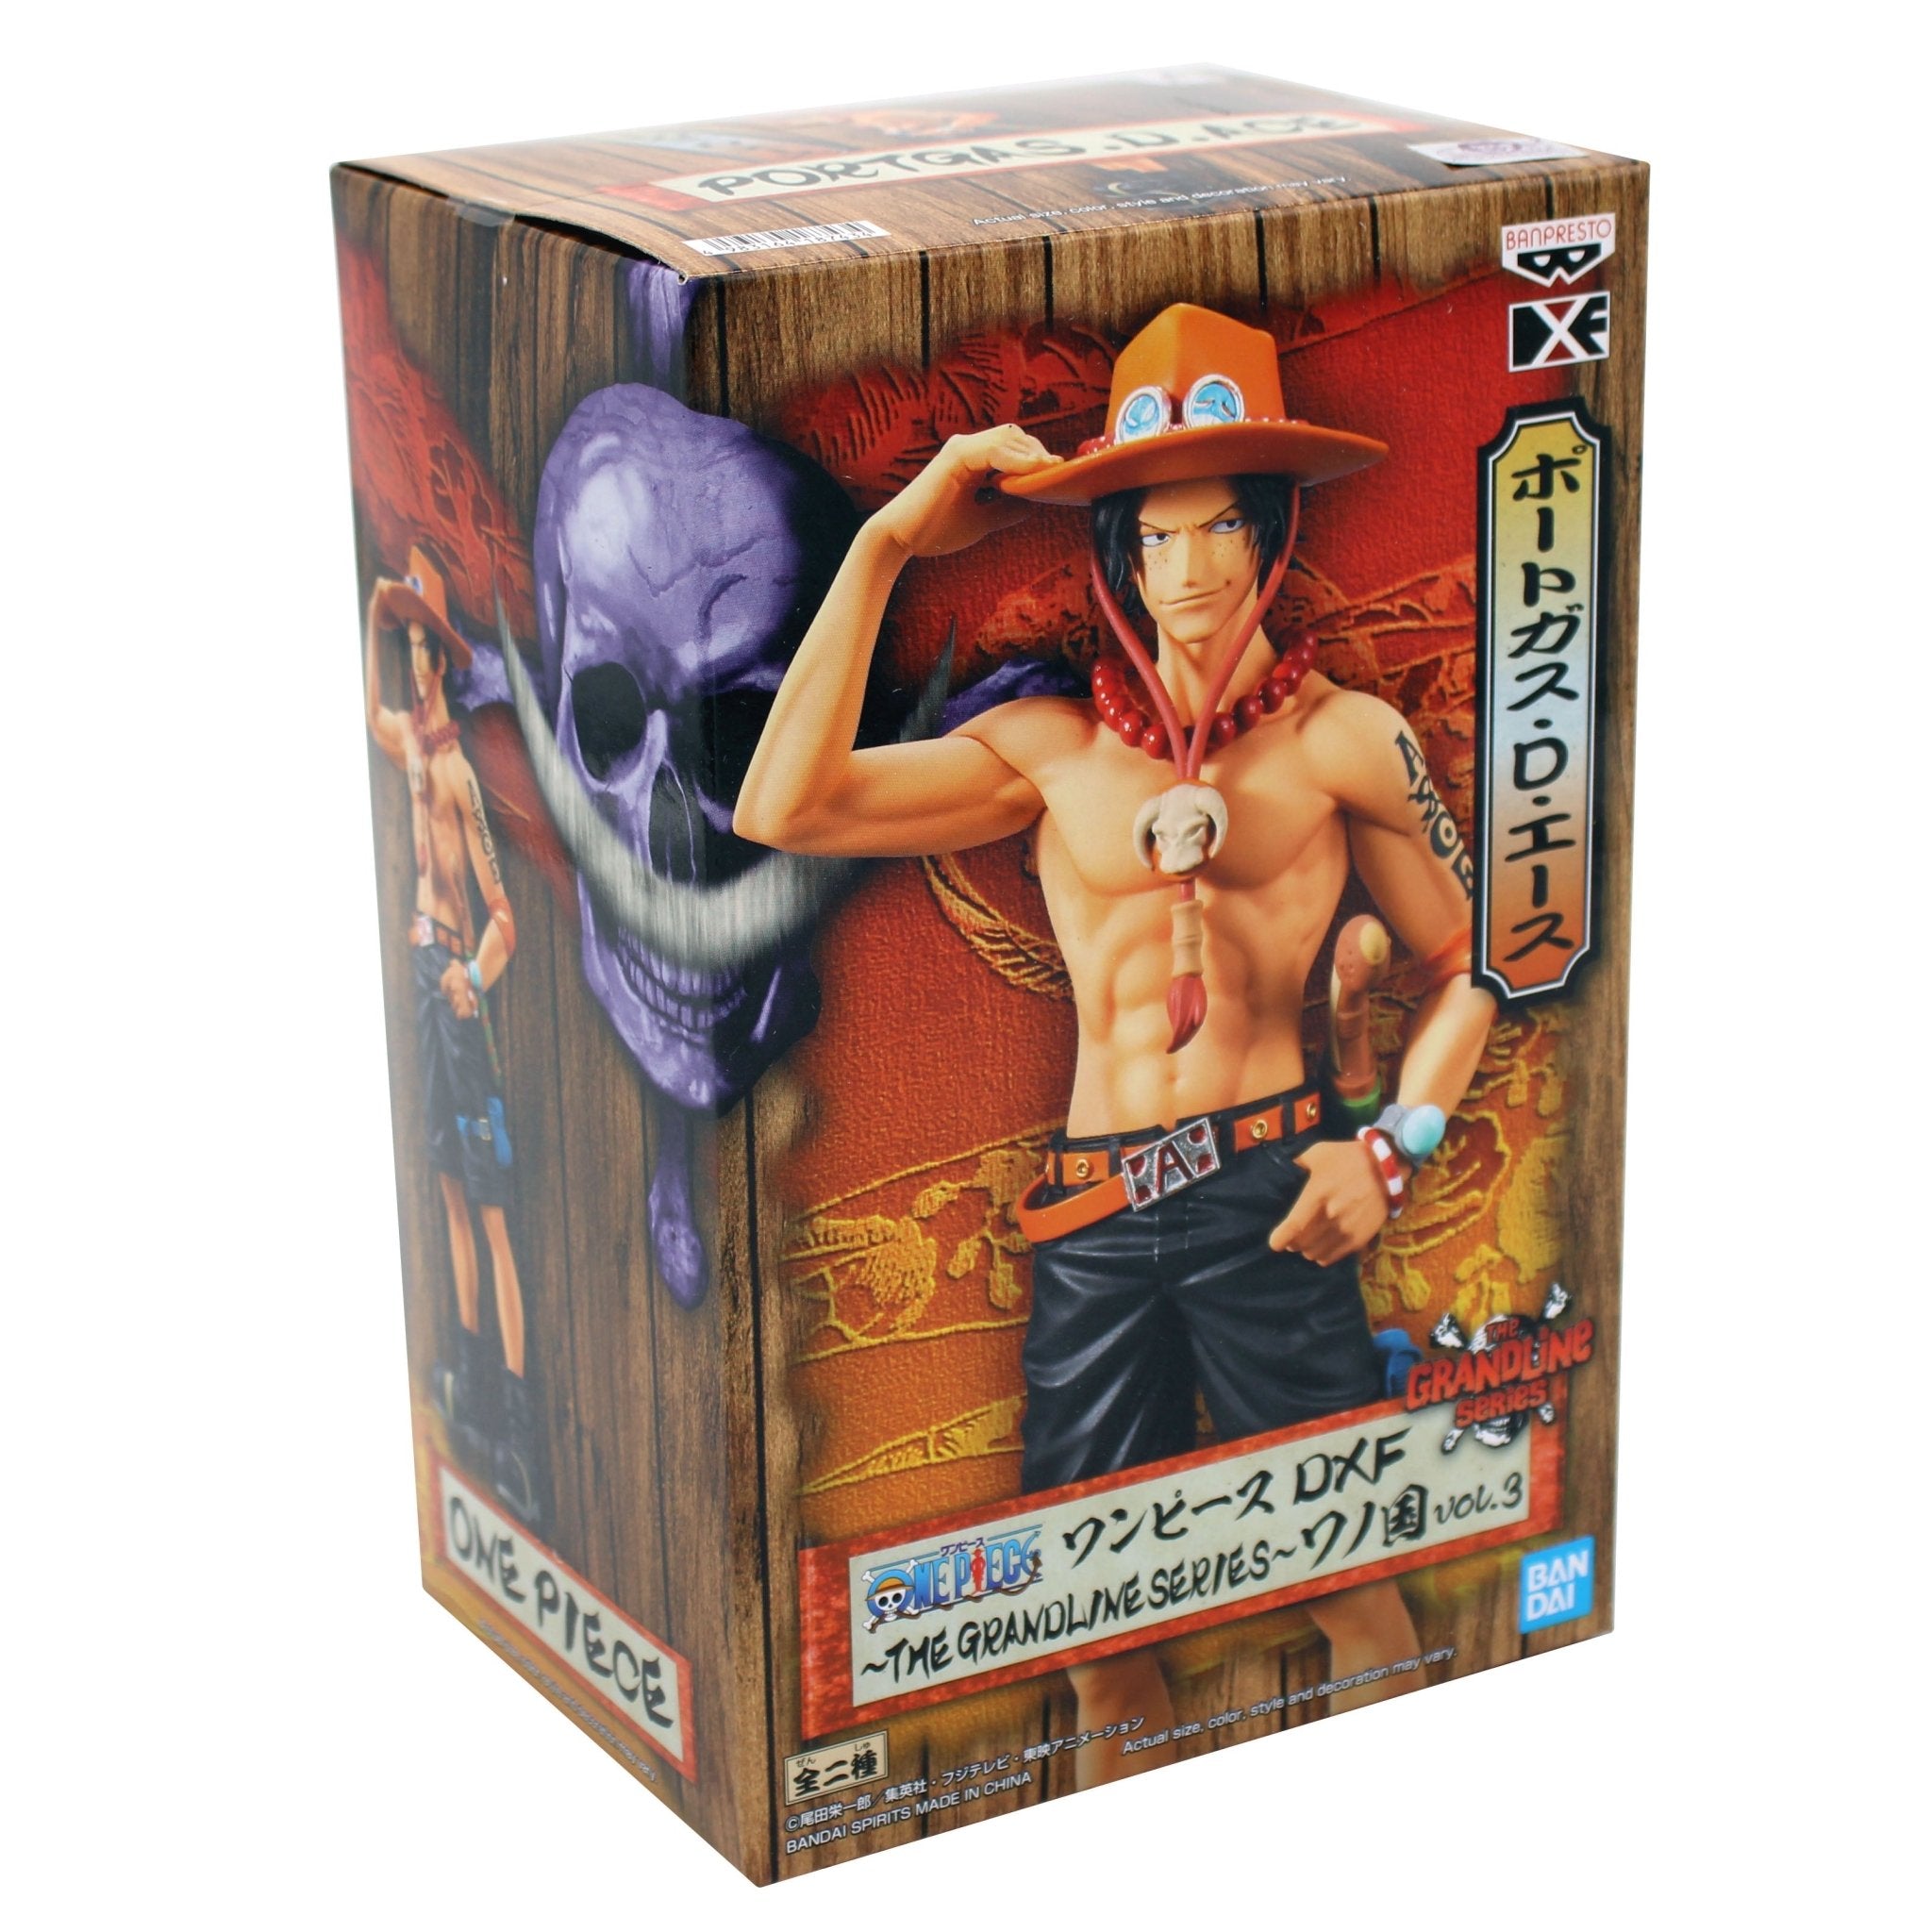 One Piece DXF The Grand Line Series Portagas D. Ace Vol.3 Wanokuni Figure - Banpresto - 6